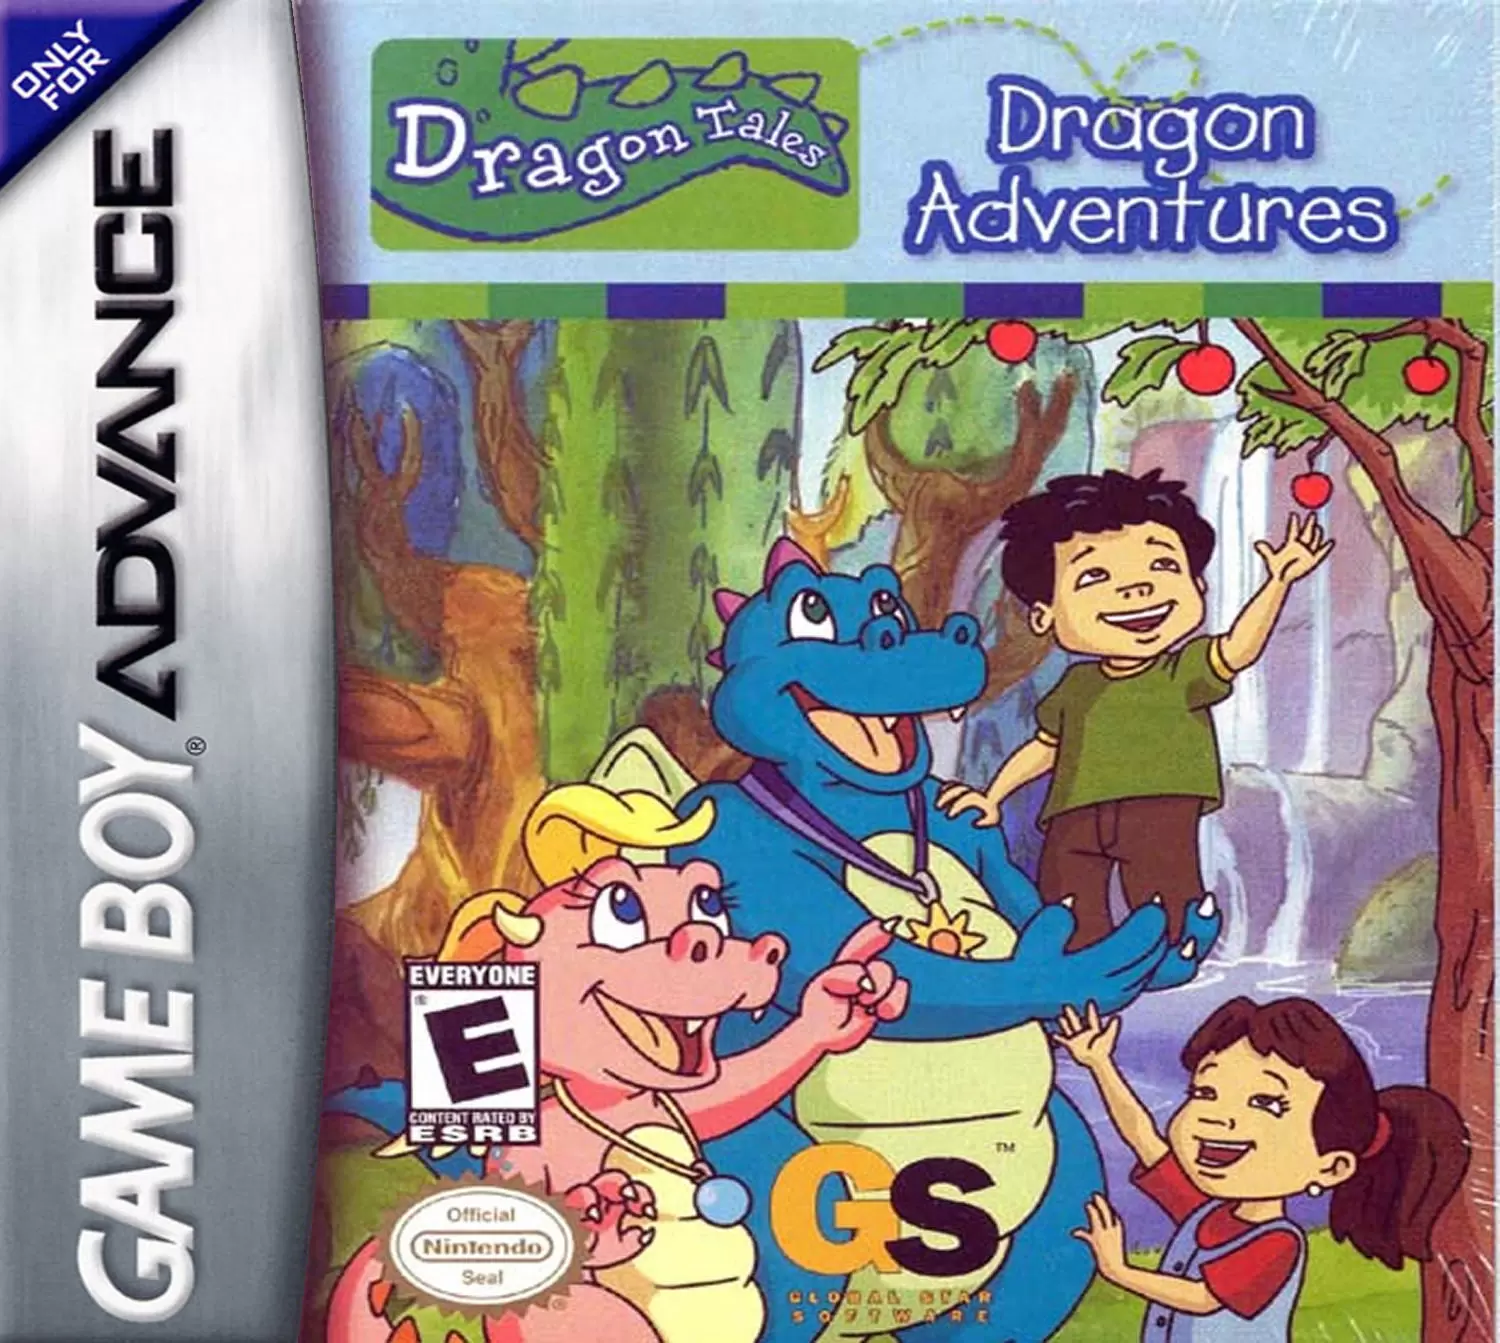 Game Boy Advance Games - Dragon Tales: Dragon Adventures